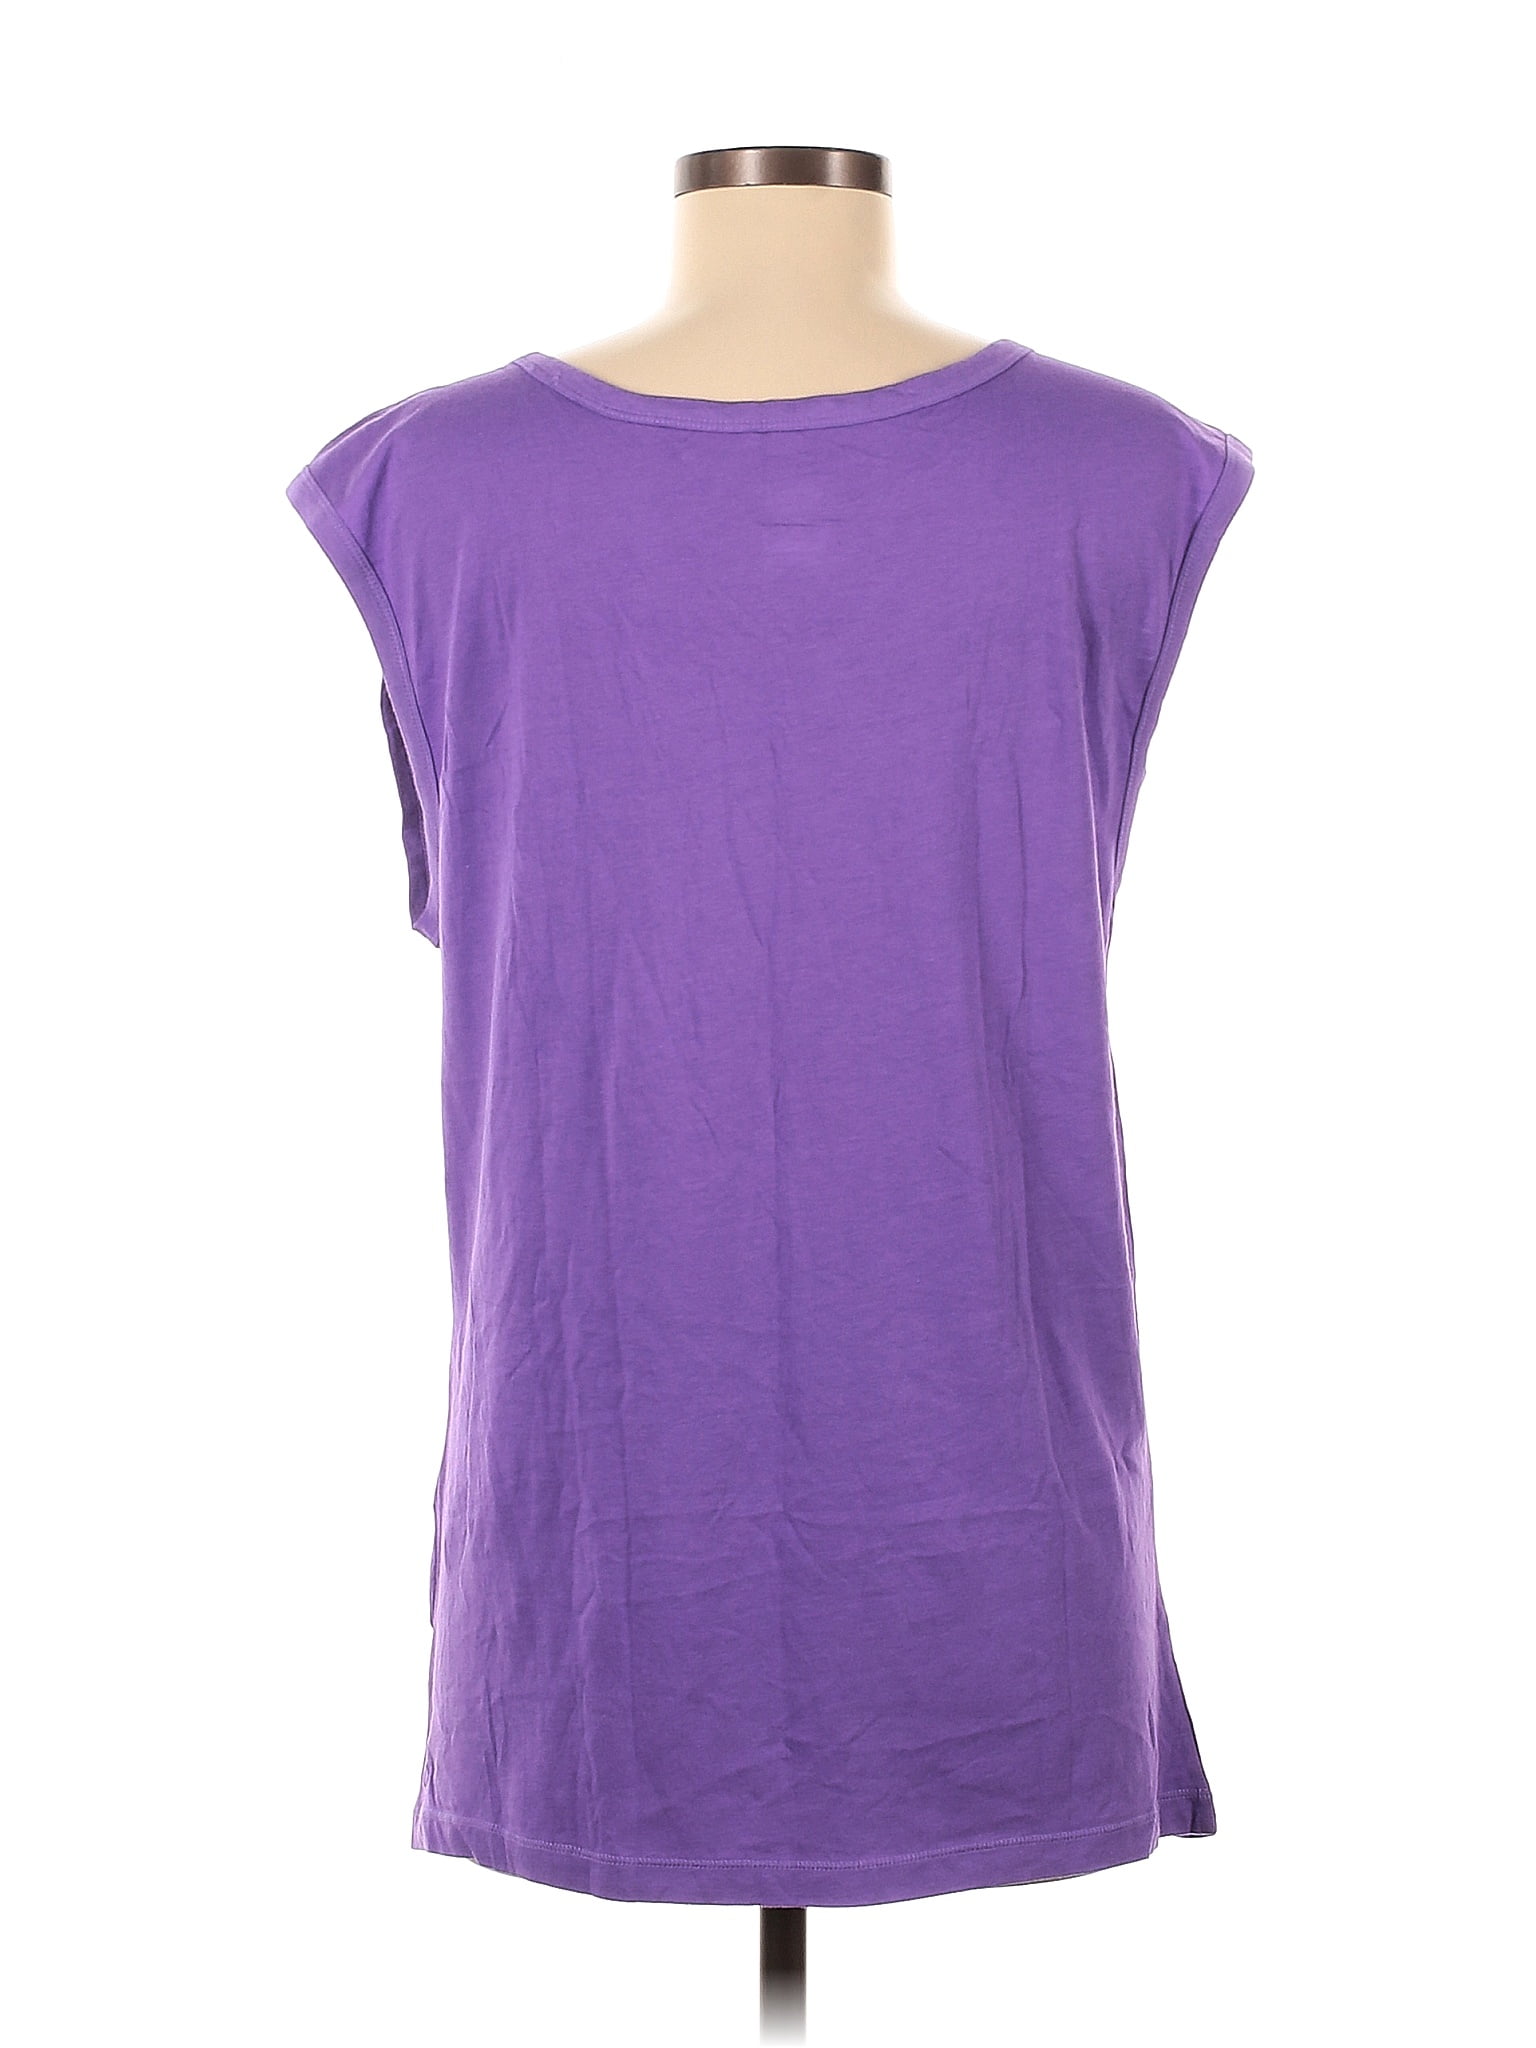 GAIAM Solid Purple Active T-Shirt Size M - 44% off